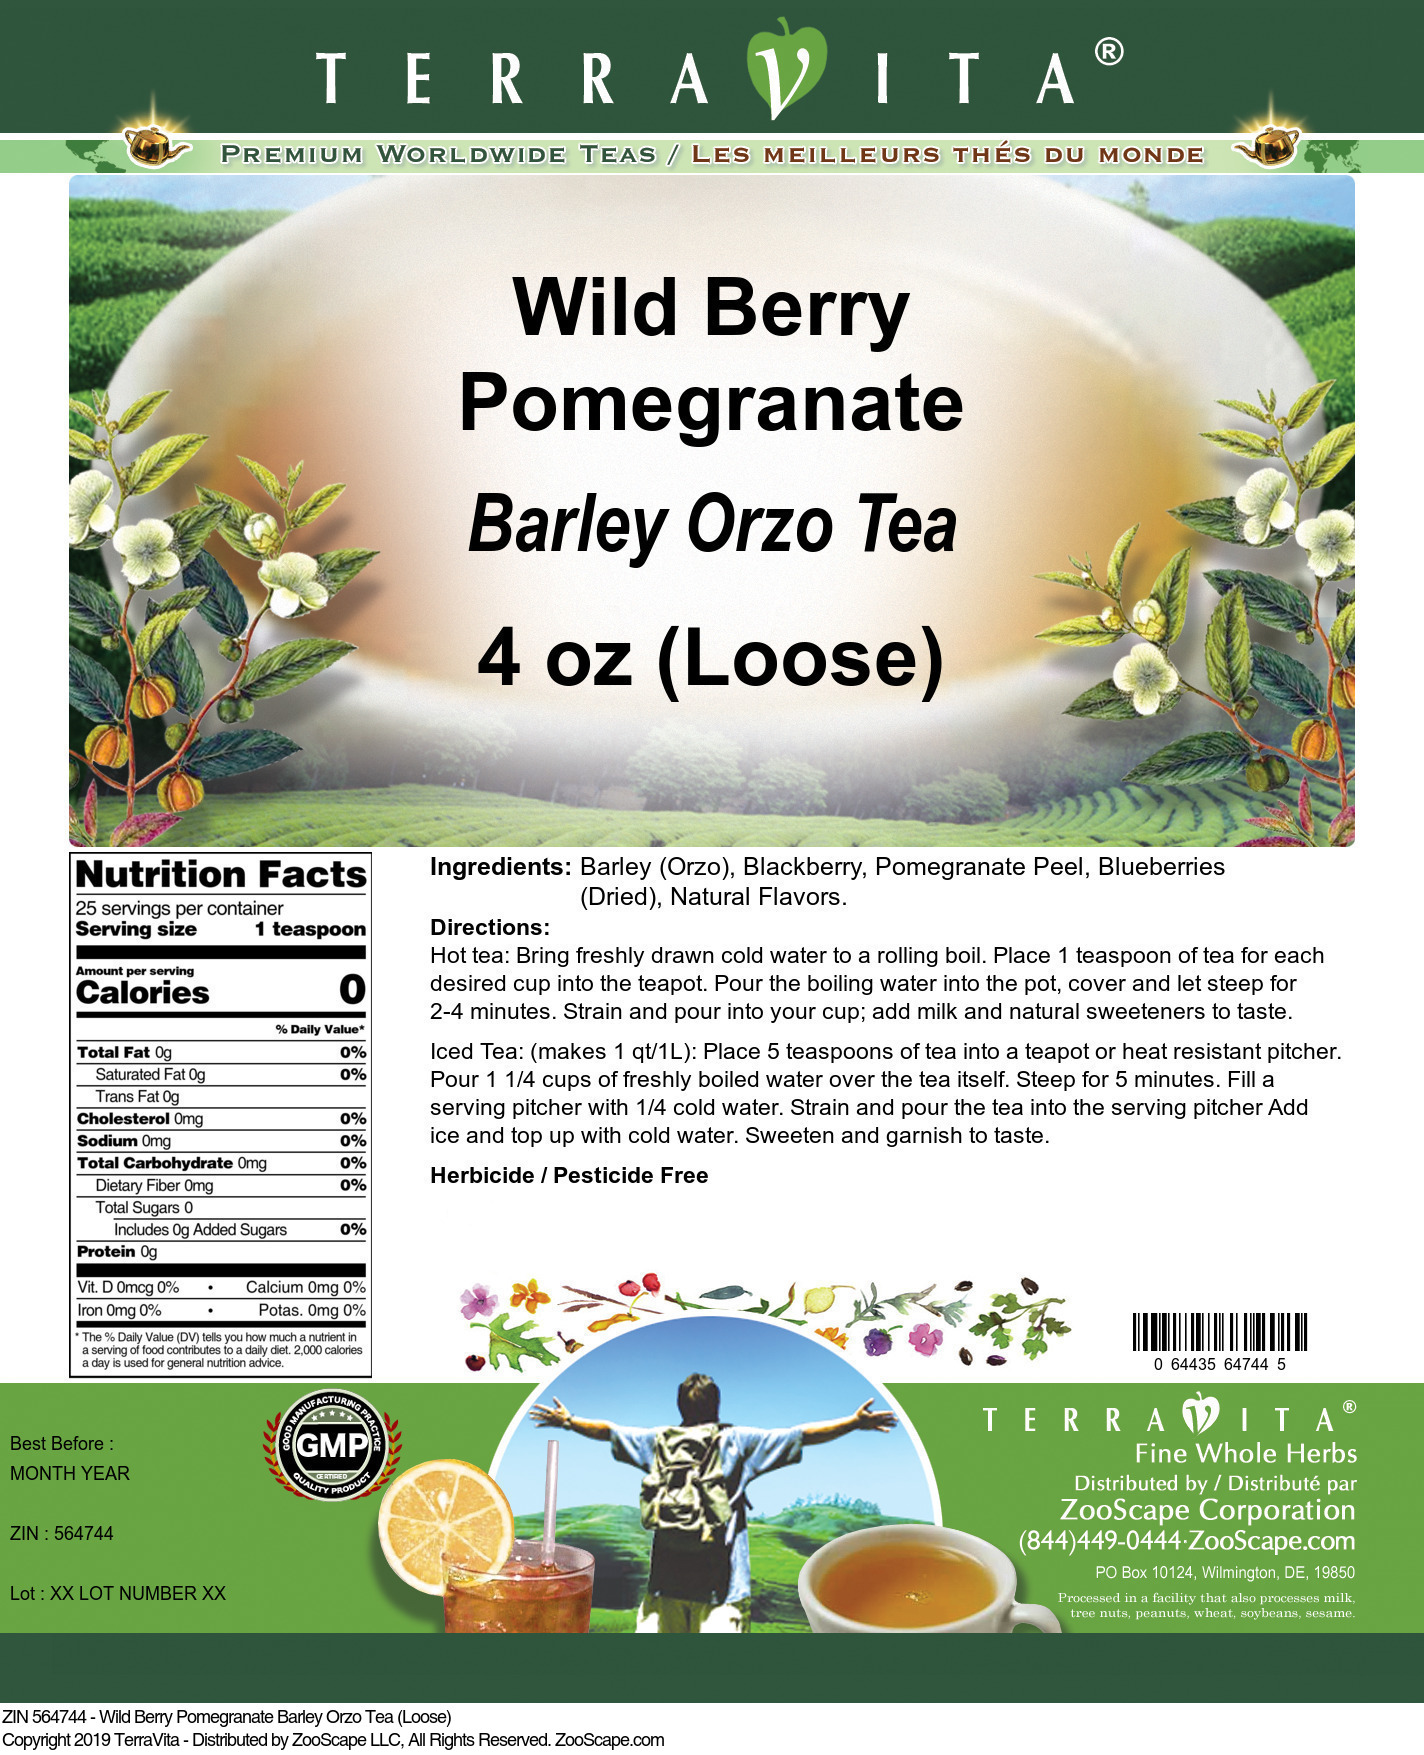 Wild Berry Pomegranate Barley Orzo Tea (Loose) - Label